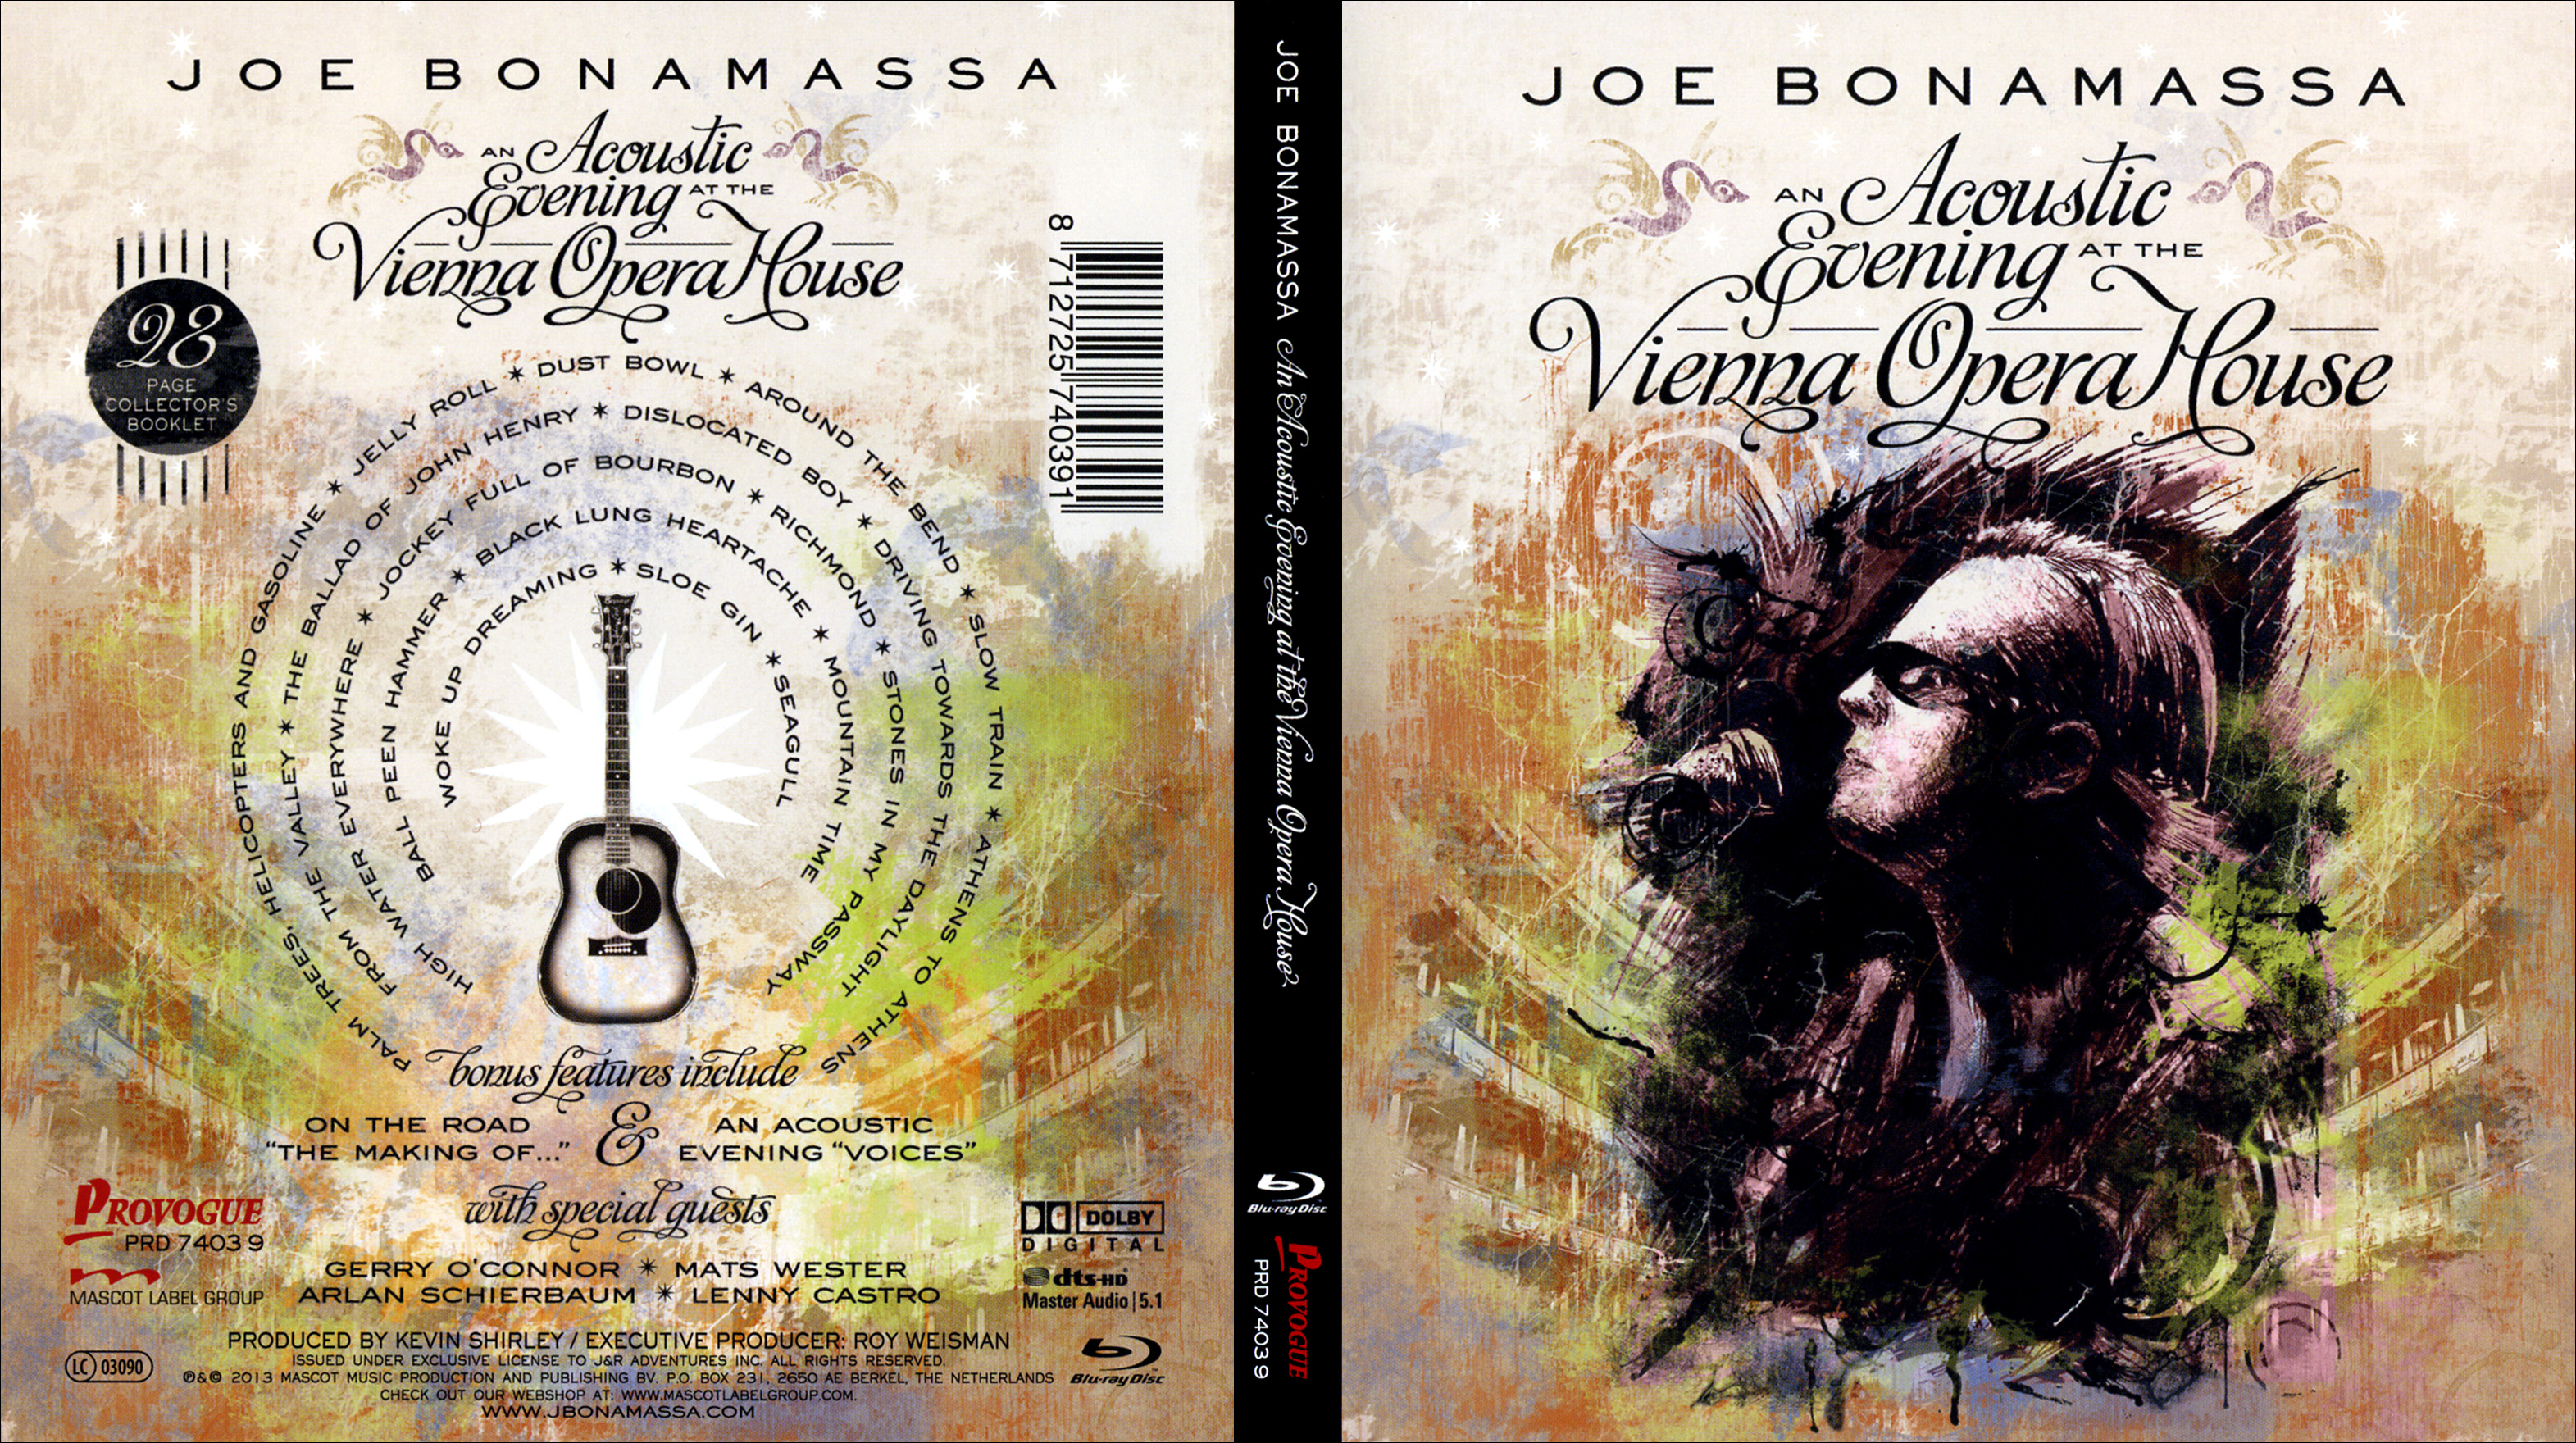 Jaquette DVD Joe Bonamassa An acoustic evening at the Vienna Opera House (BLU-RAY)